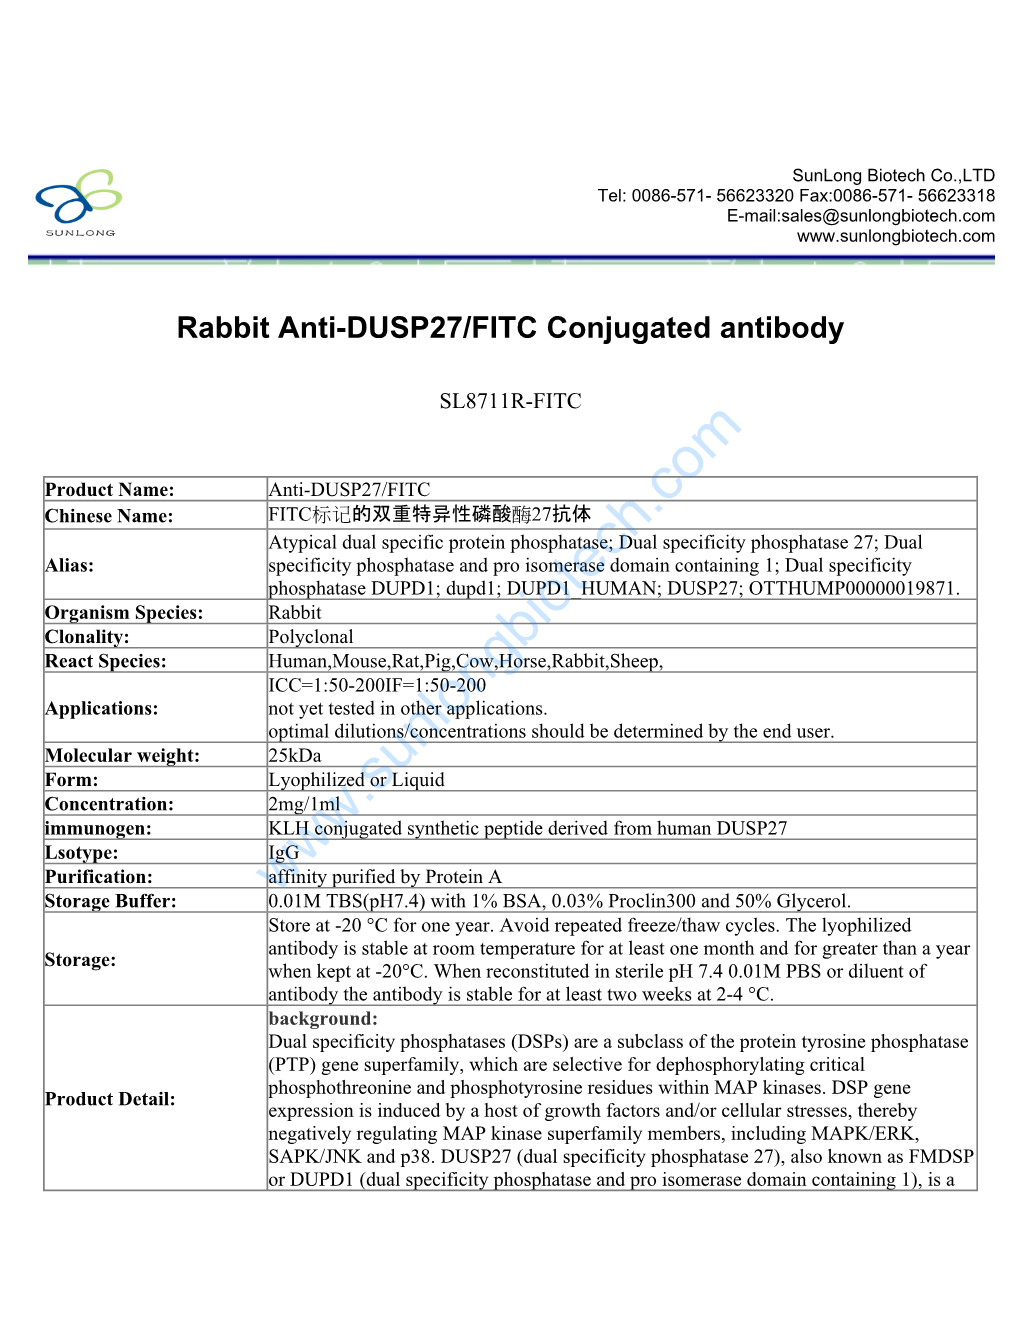 Rabbit Anti-DUSP27/FITC Conjugated Antibody